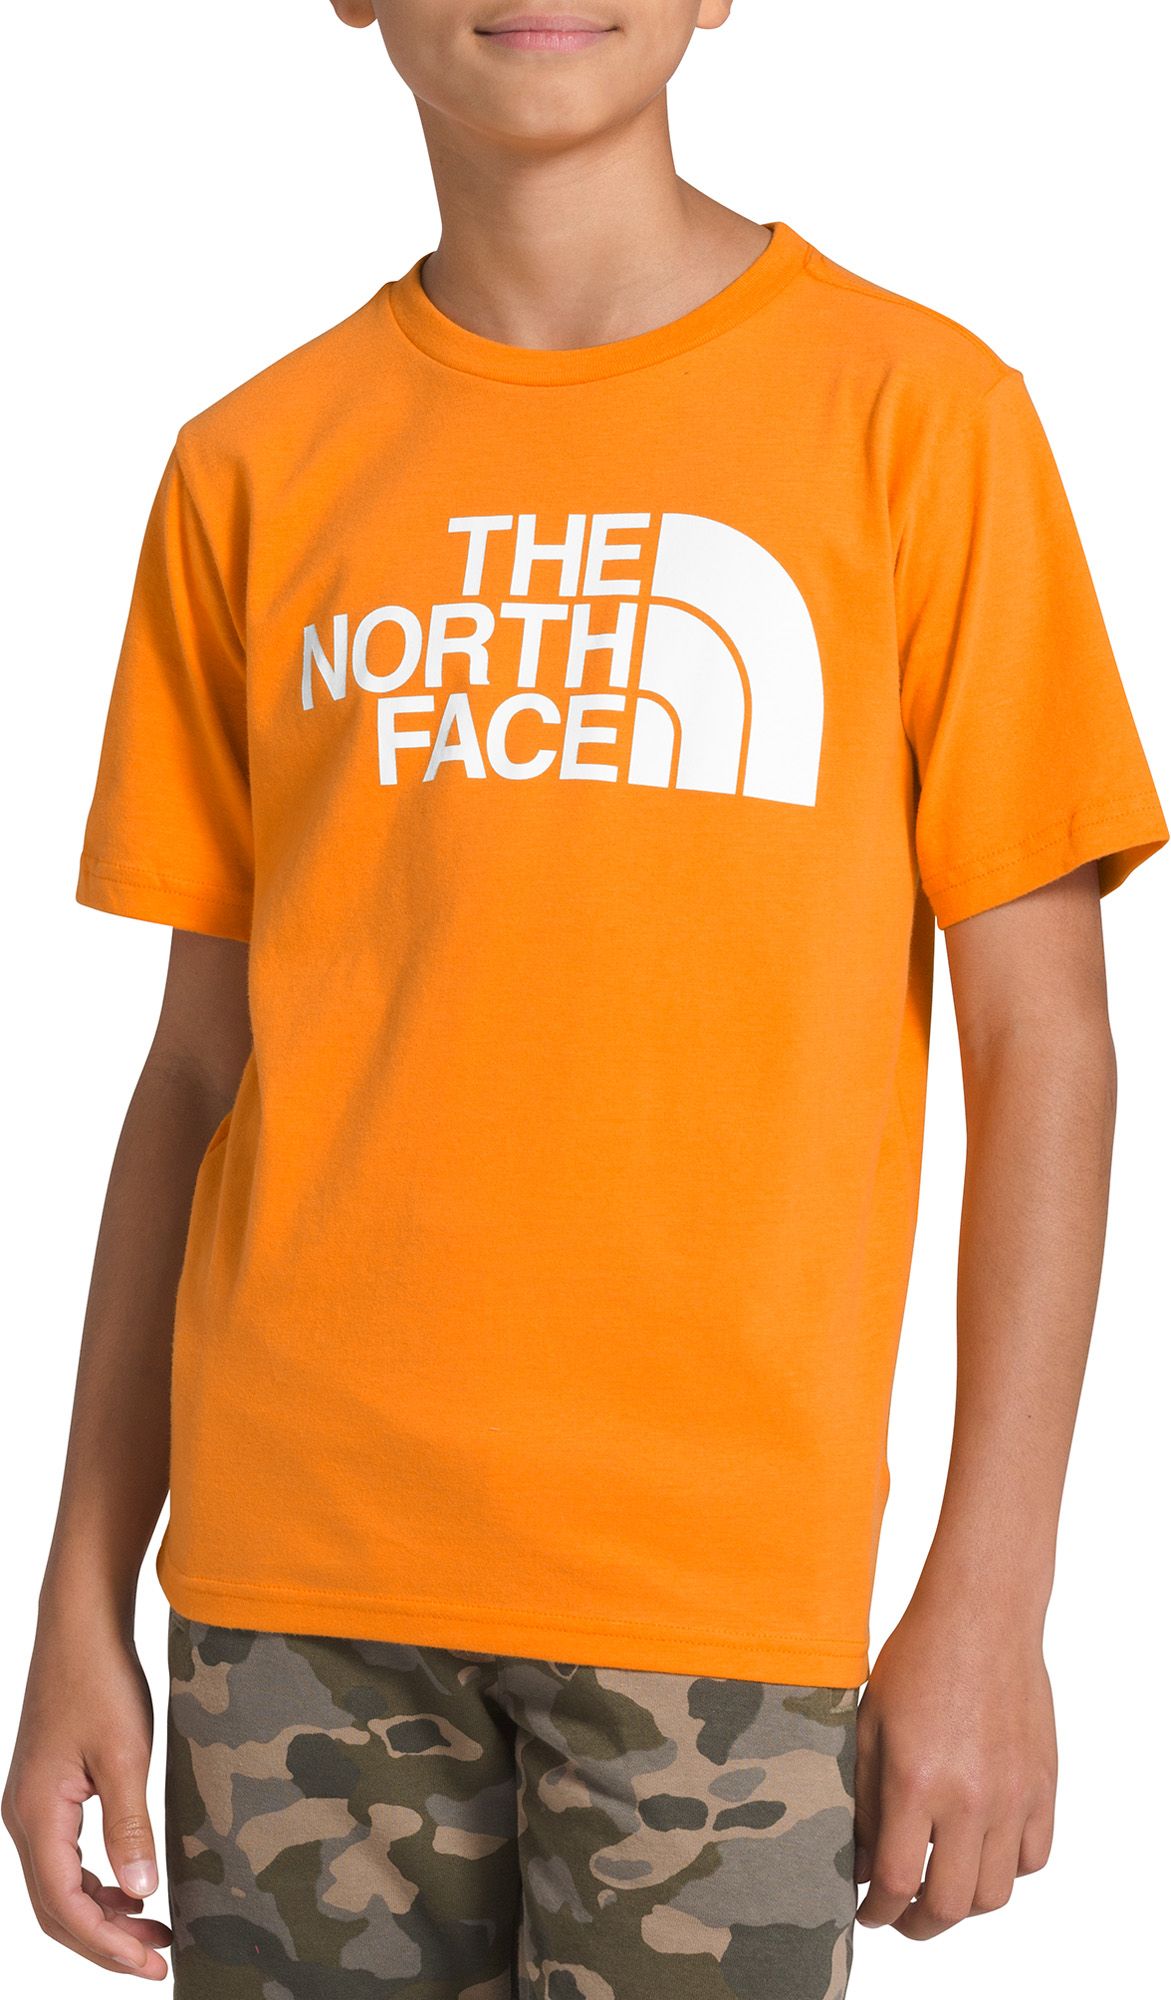 north face t shirt boys